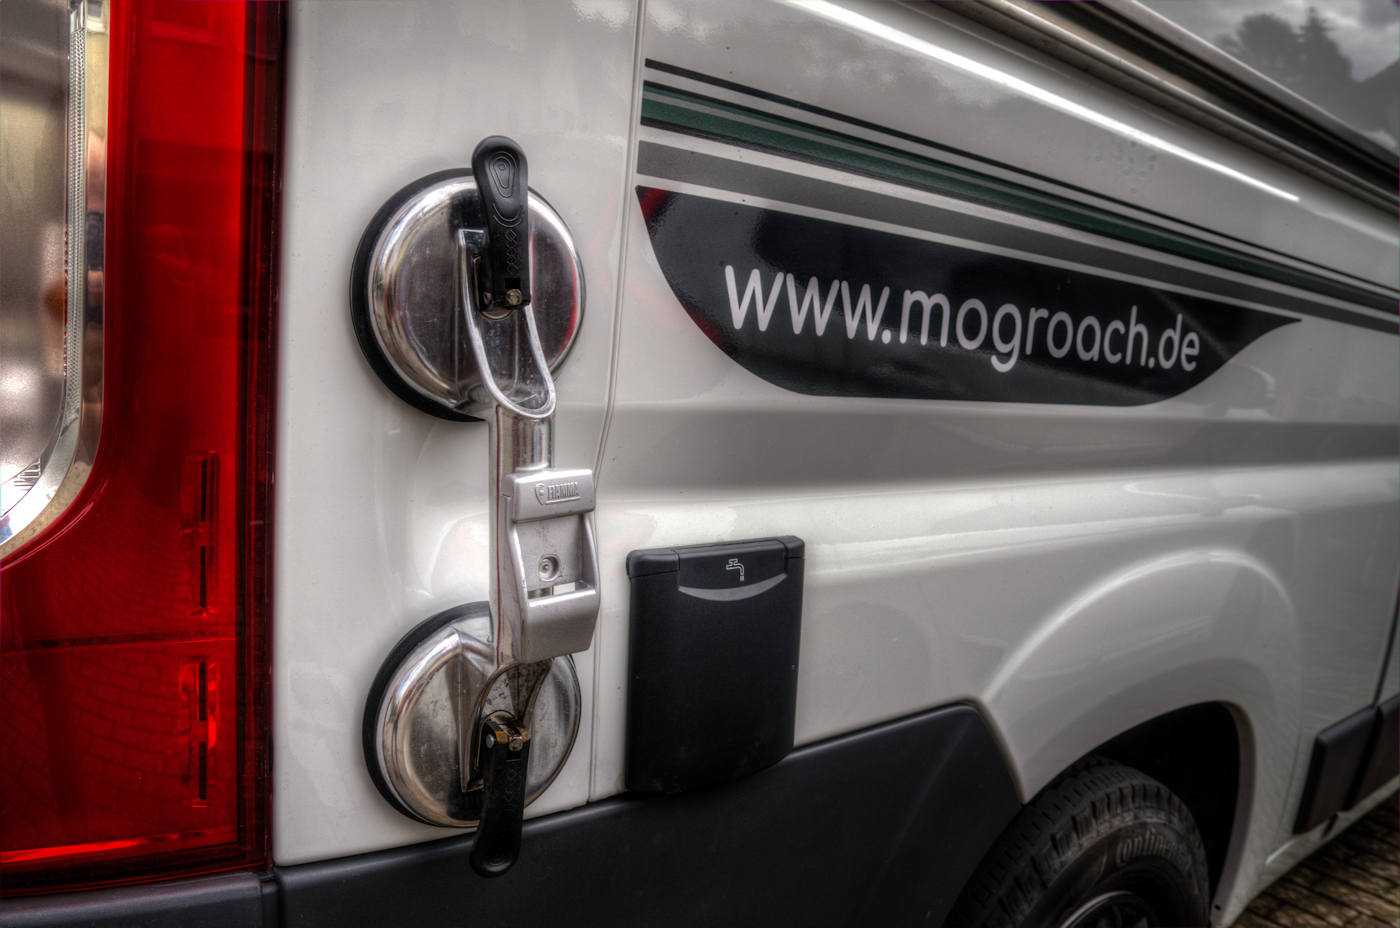 Mogroach Wohnmobil Ausbau Gadget Hack Markisenhalterung